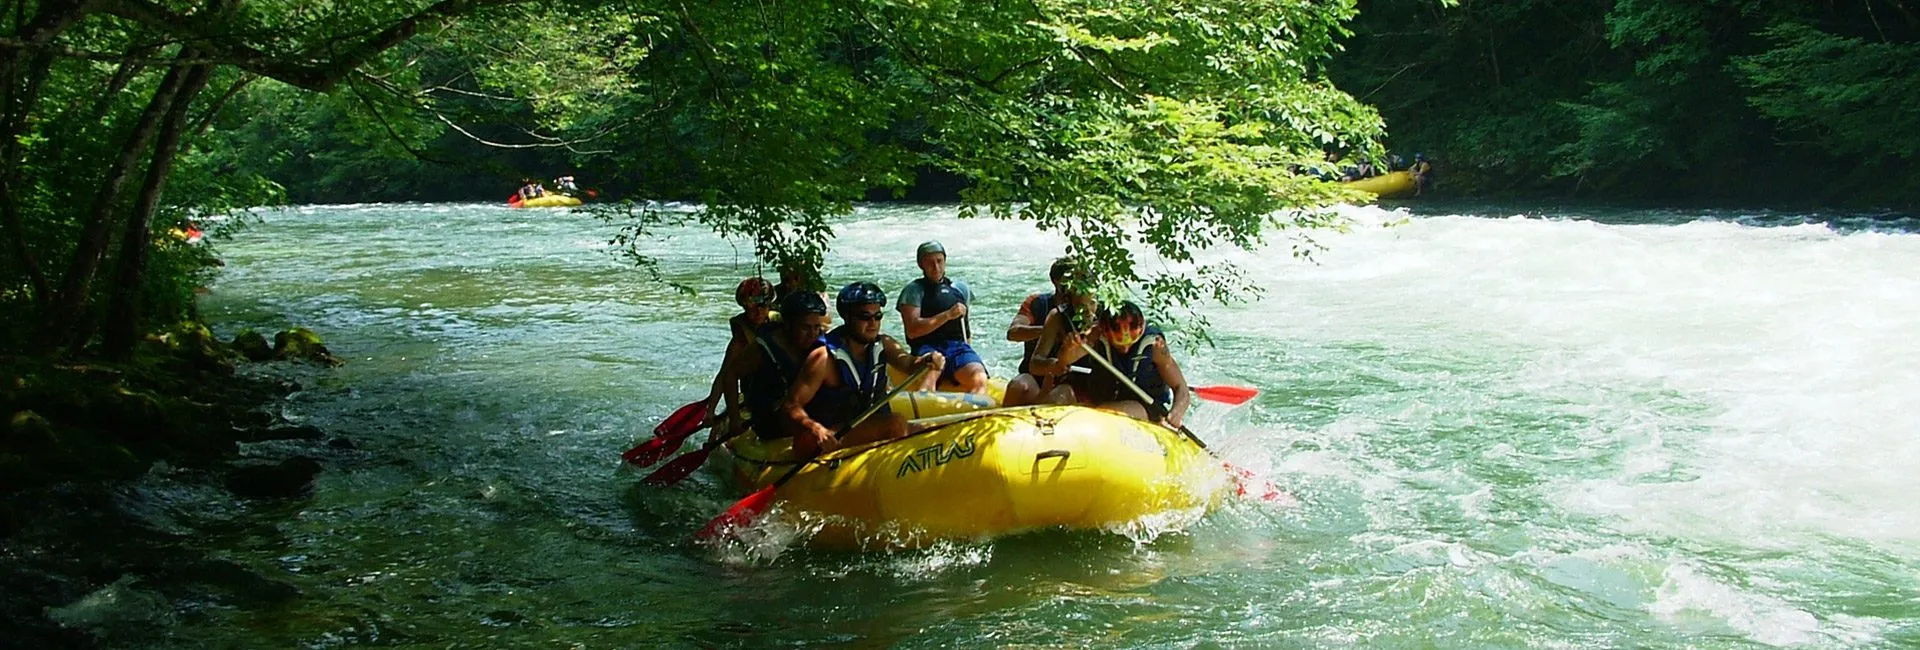 Rafting on river zagreb